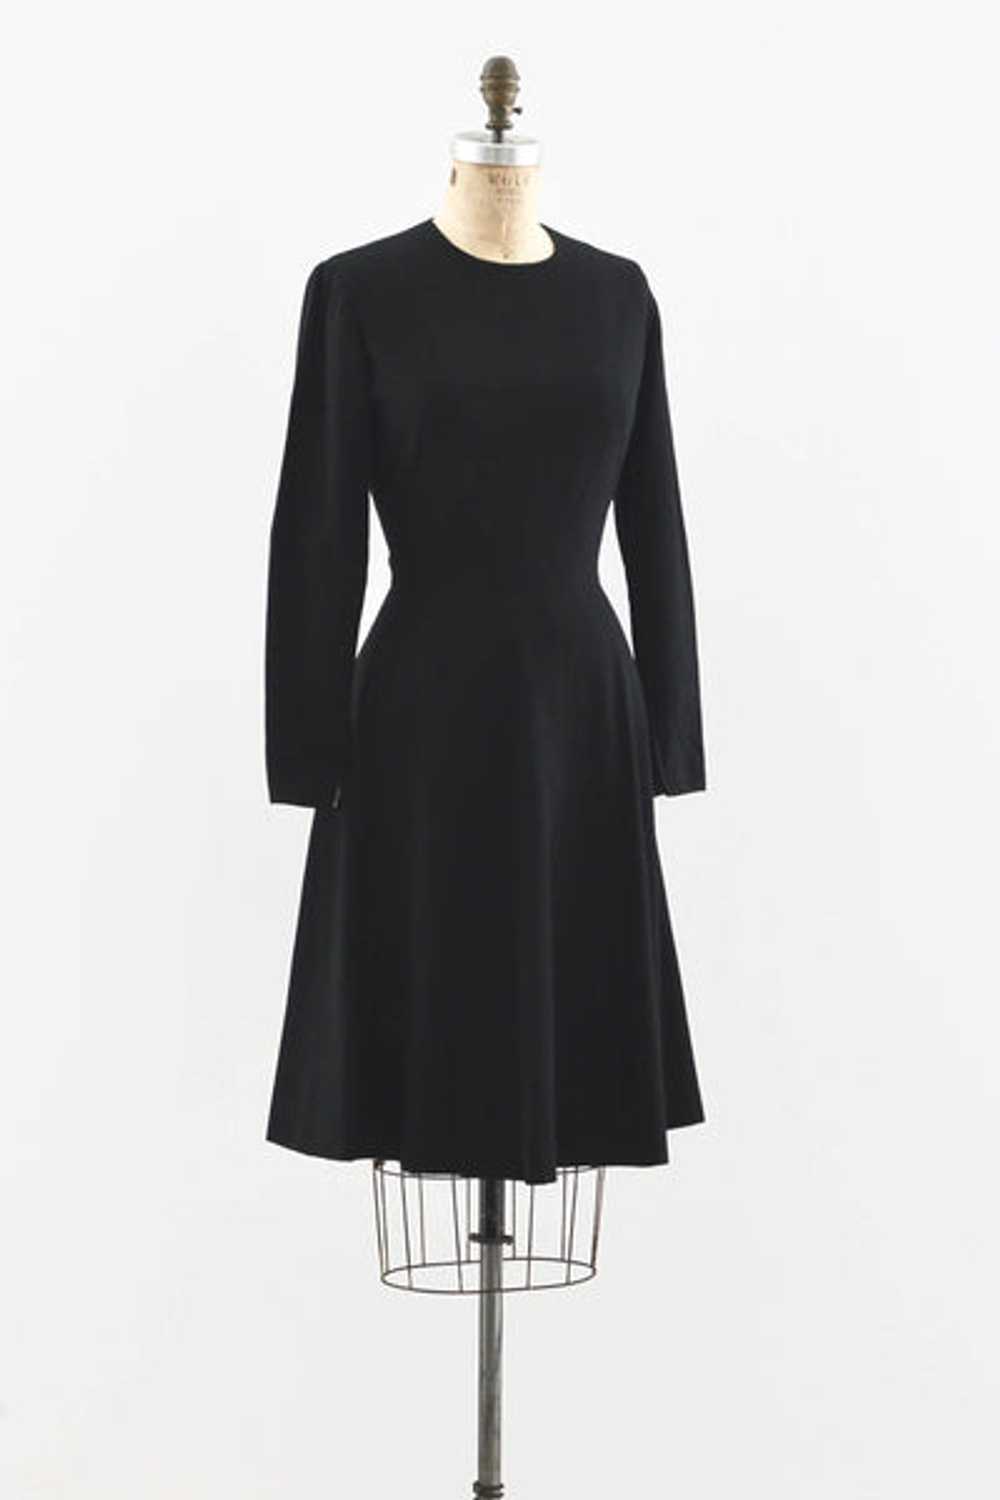 Neiman Marcus Wool Dress - image 5